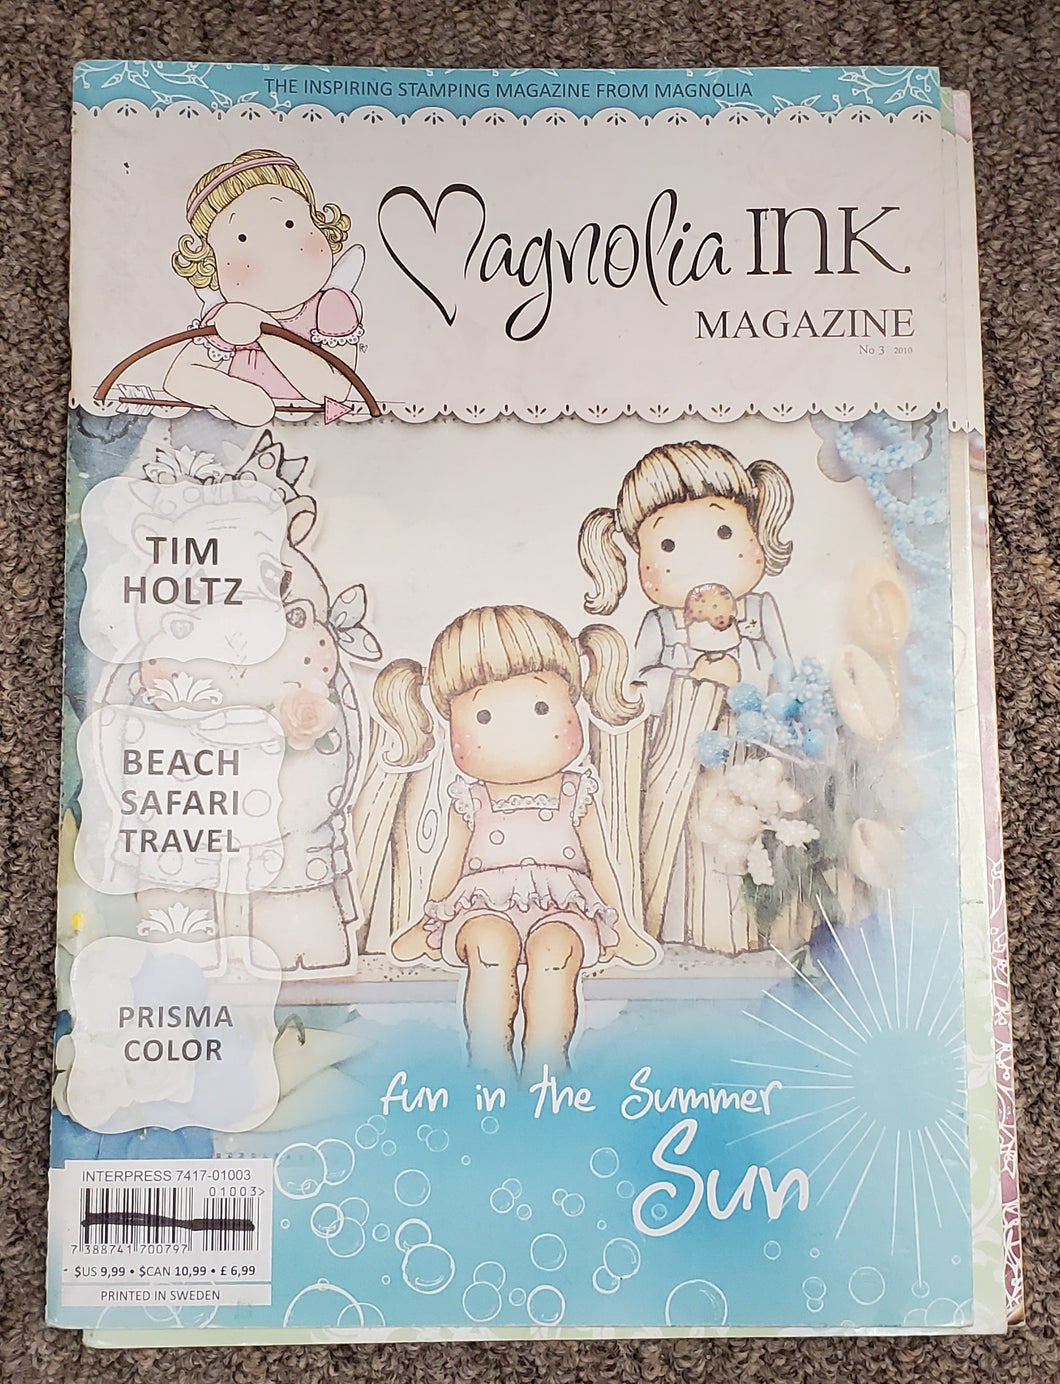 Magnolia Ink Magazine Issue No 3 2010 - Fun in the Summer Sun